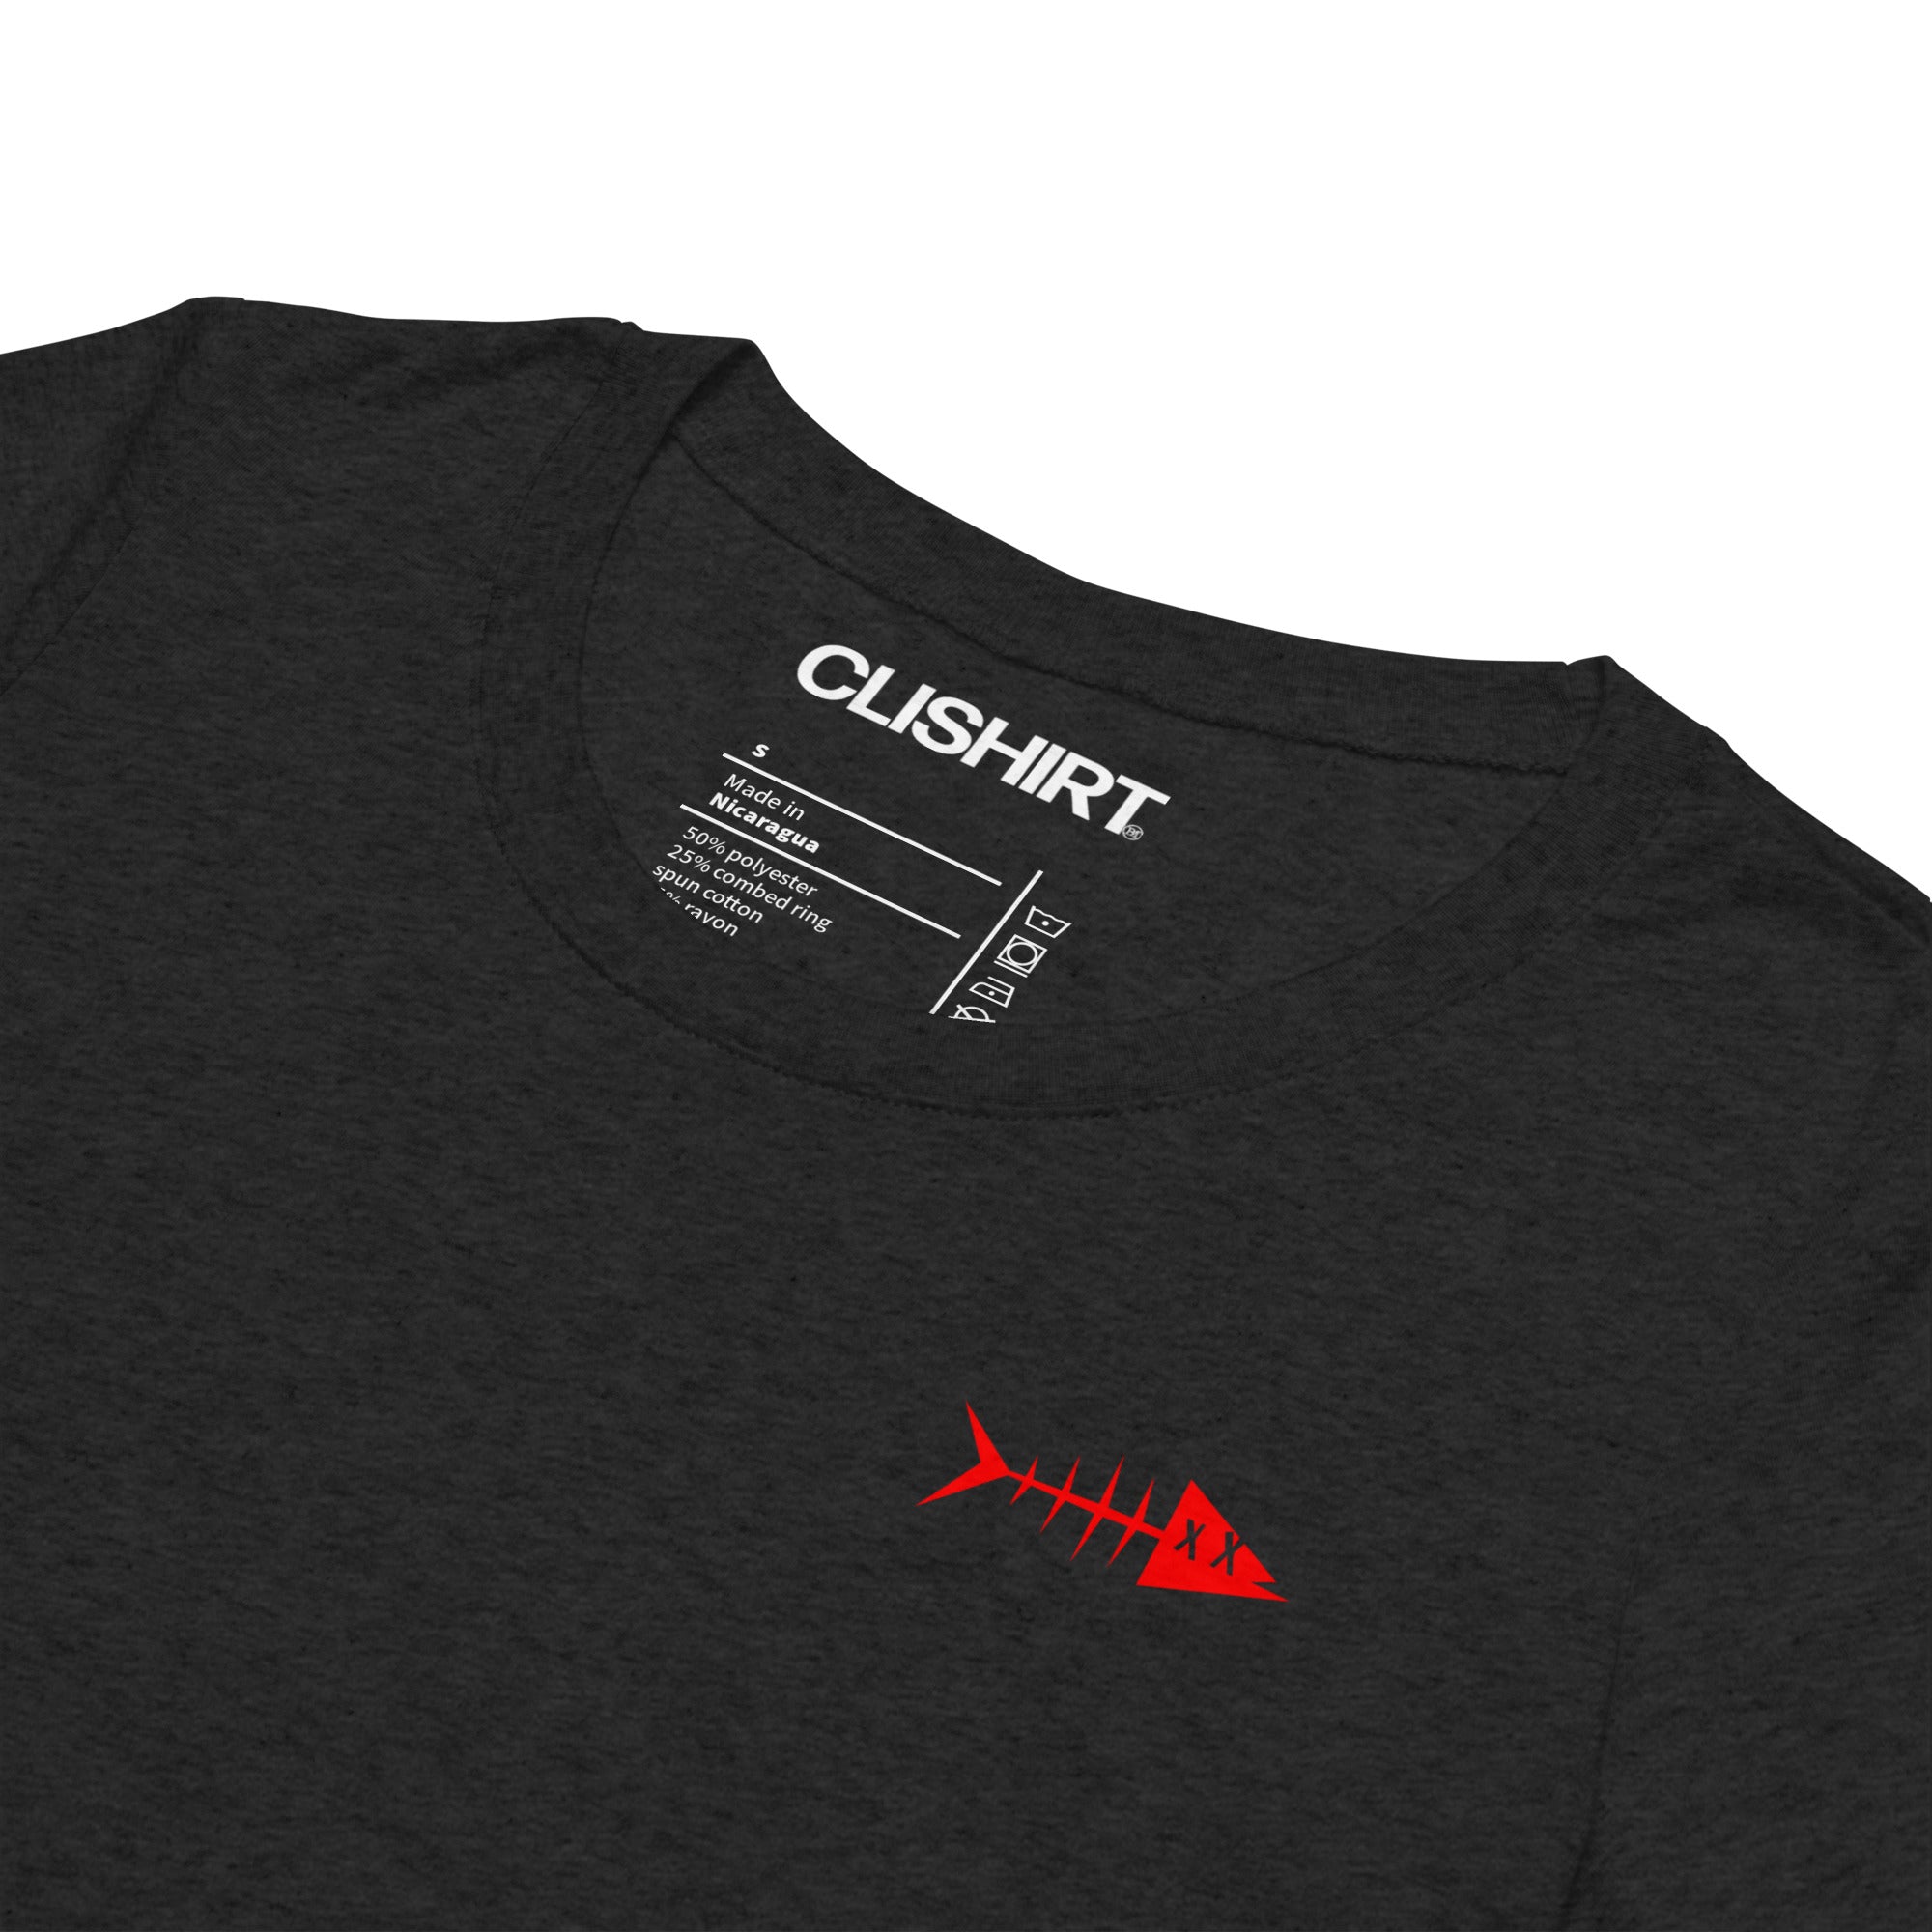 Clishirt© Red Fish Ladies' short sleeve t-shirt